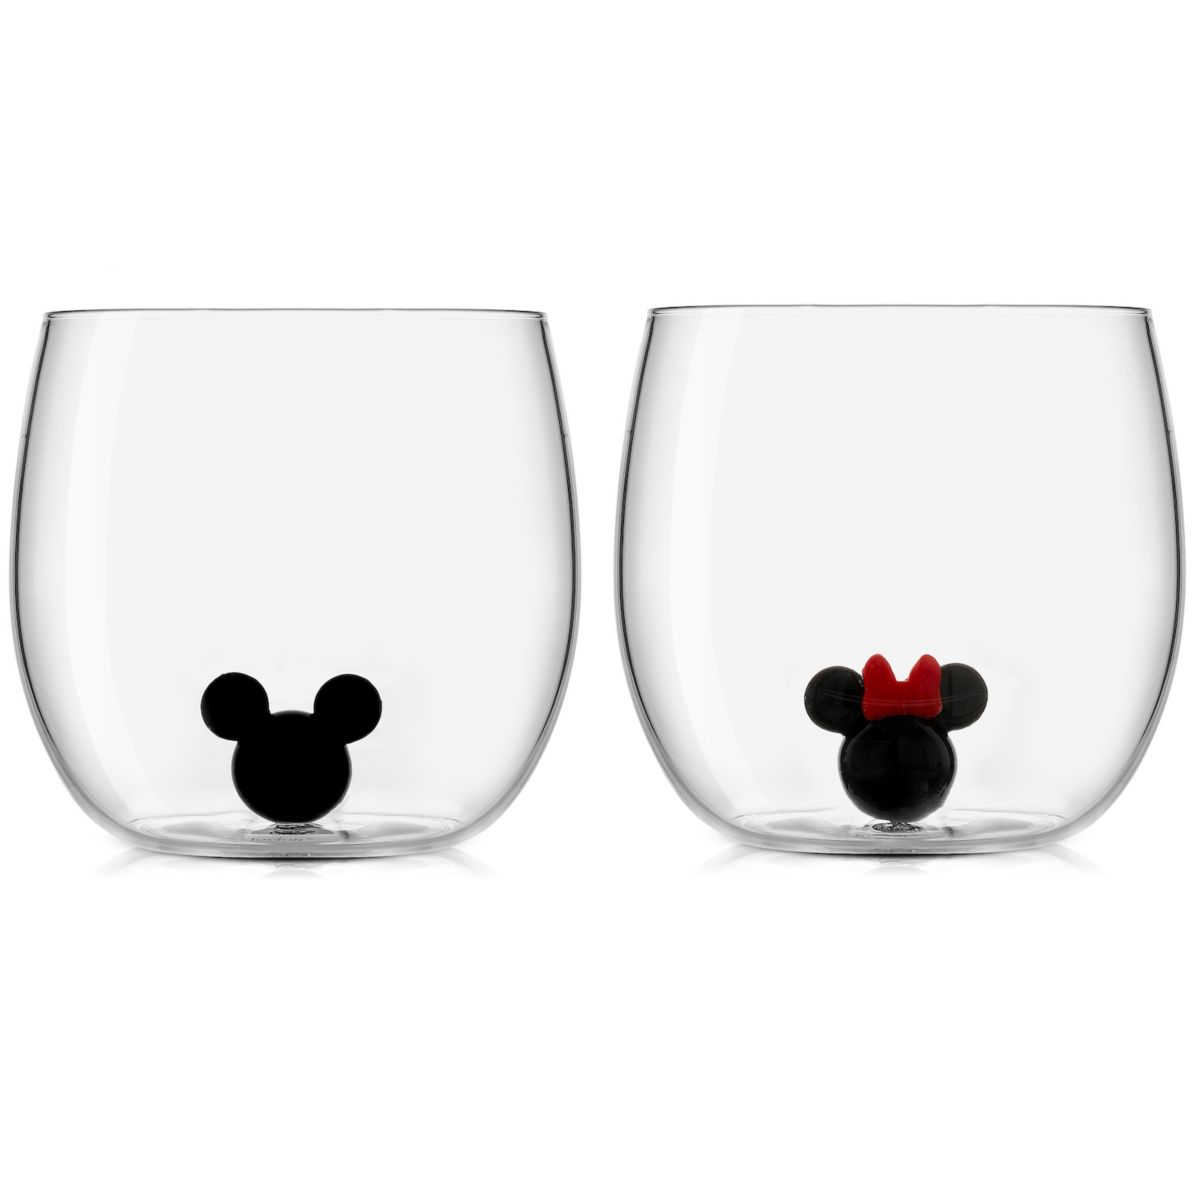 Икона Микки Мауса и Минни Маус от Disney, 10 унций. Набор бокалов для вина без ножек, 2 шт., от JoyJolt JoyJolt